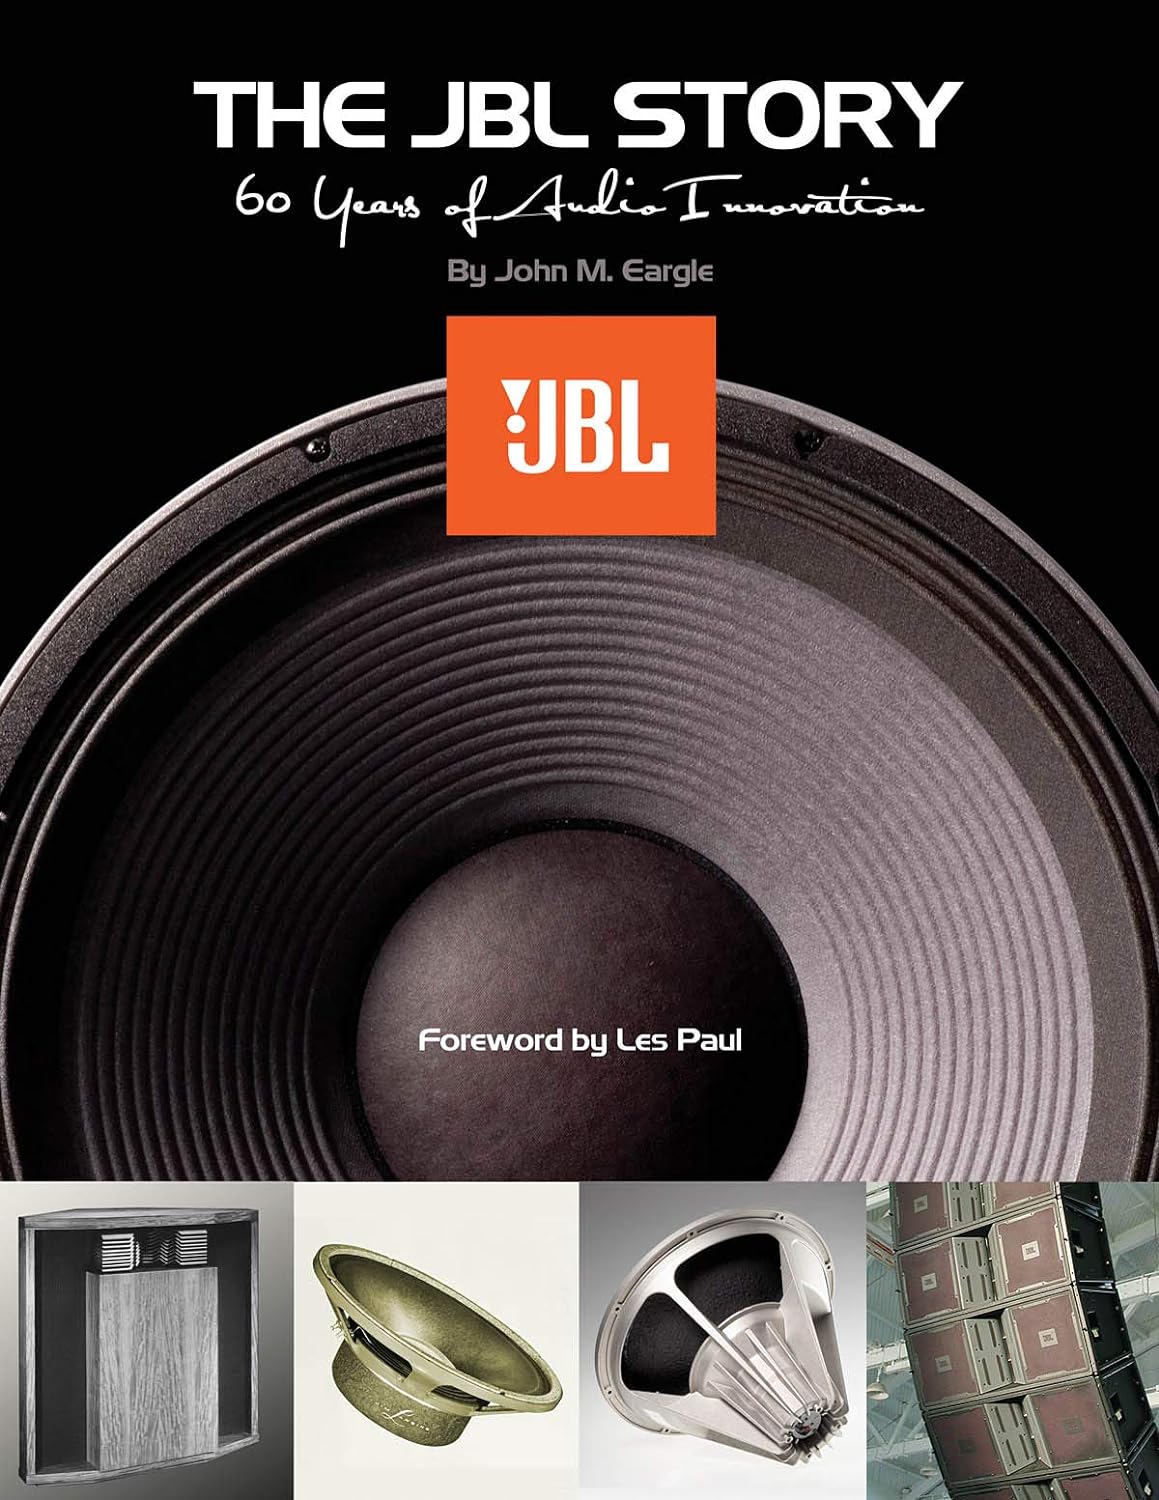 JOHN M. EARGLE / JBL STORY 60 YEARS OF AUDIO INNOVATION